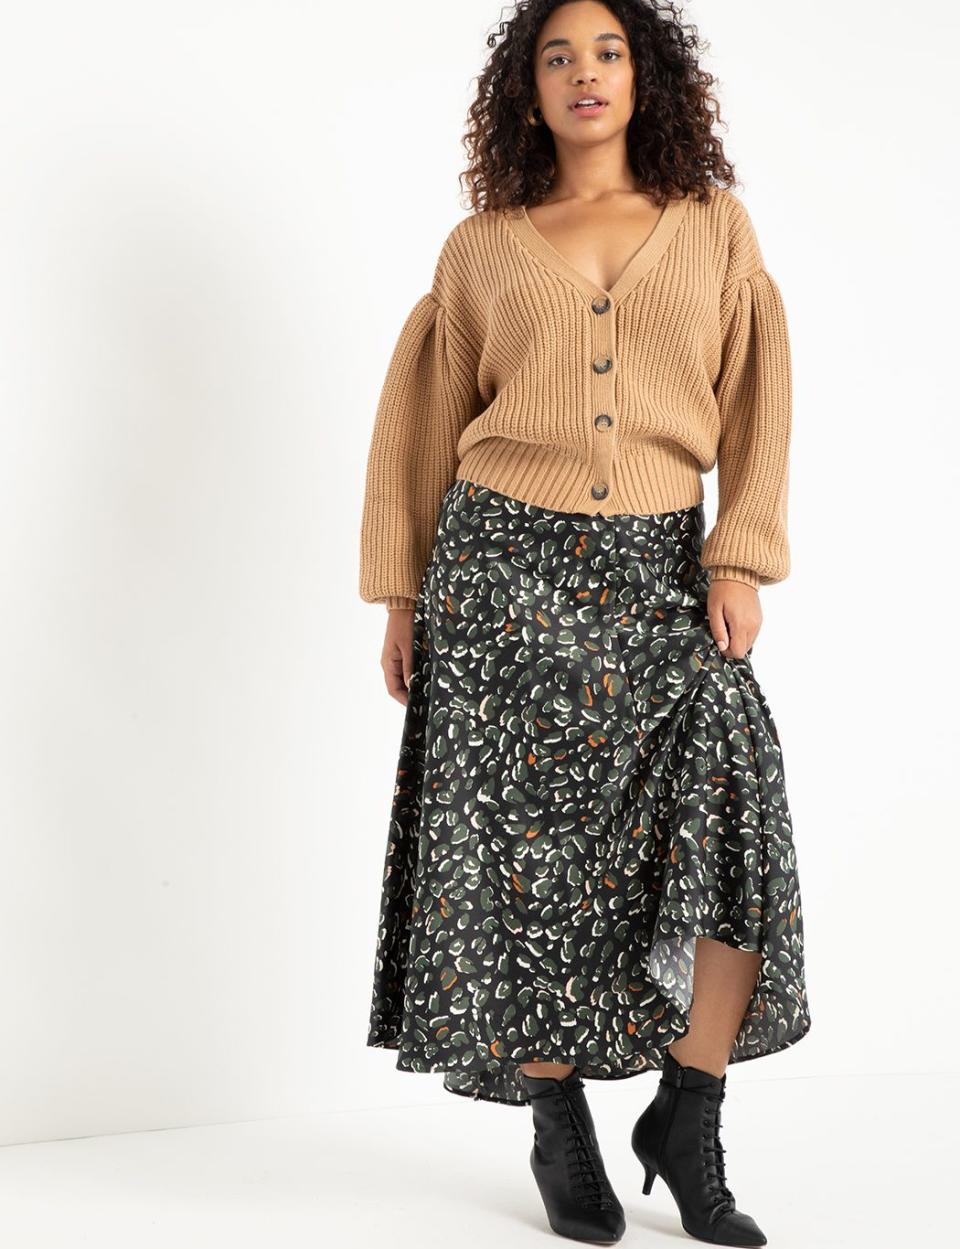 2) Flowy Maxi Skirt